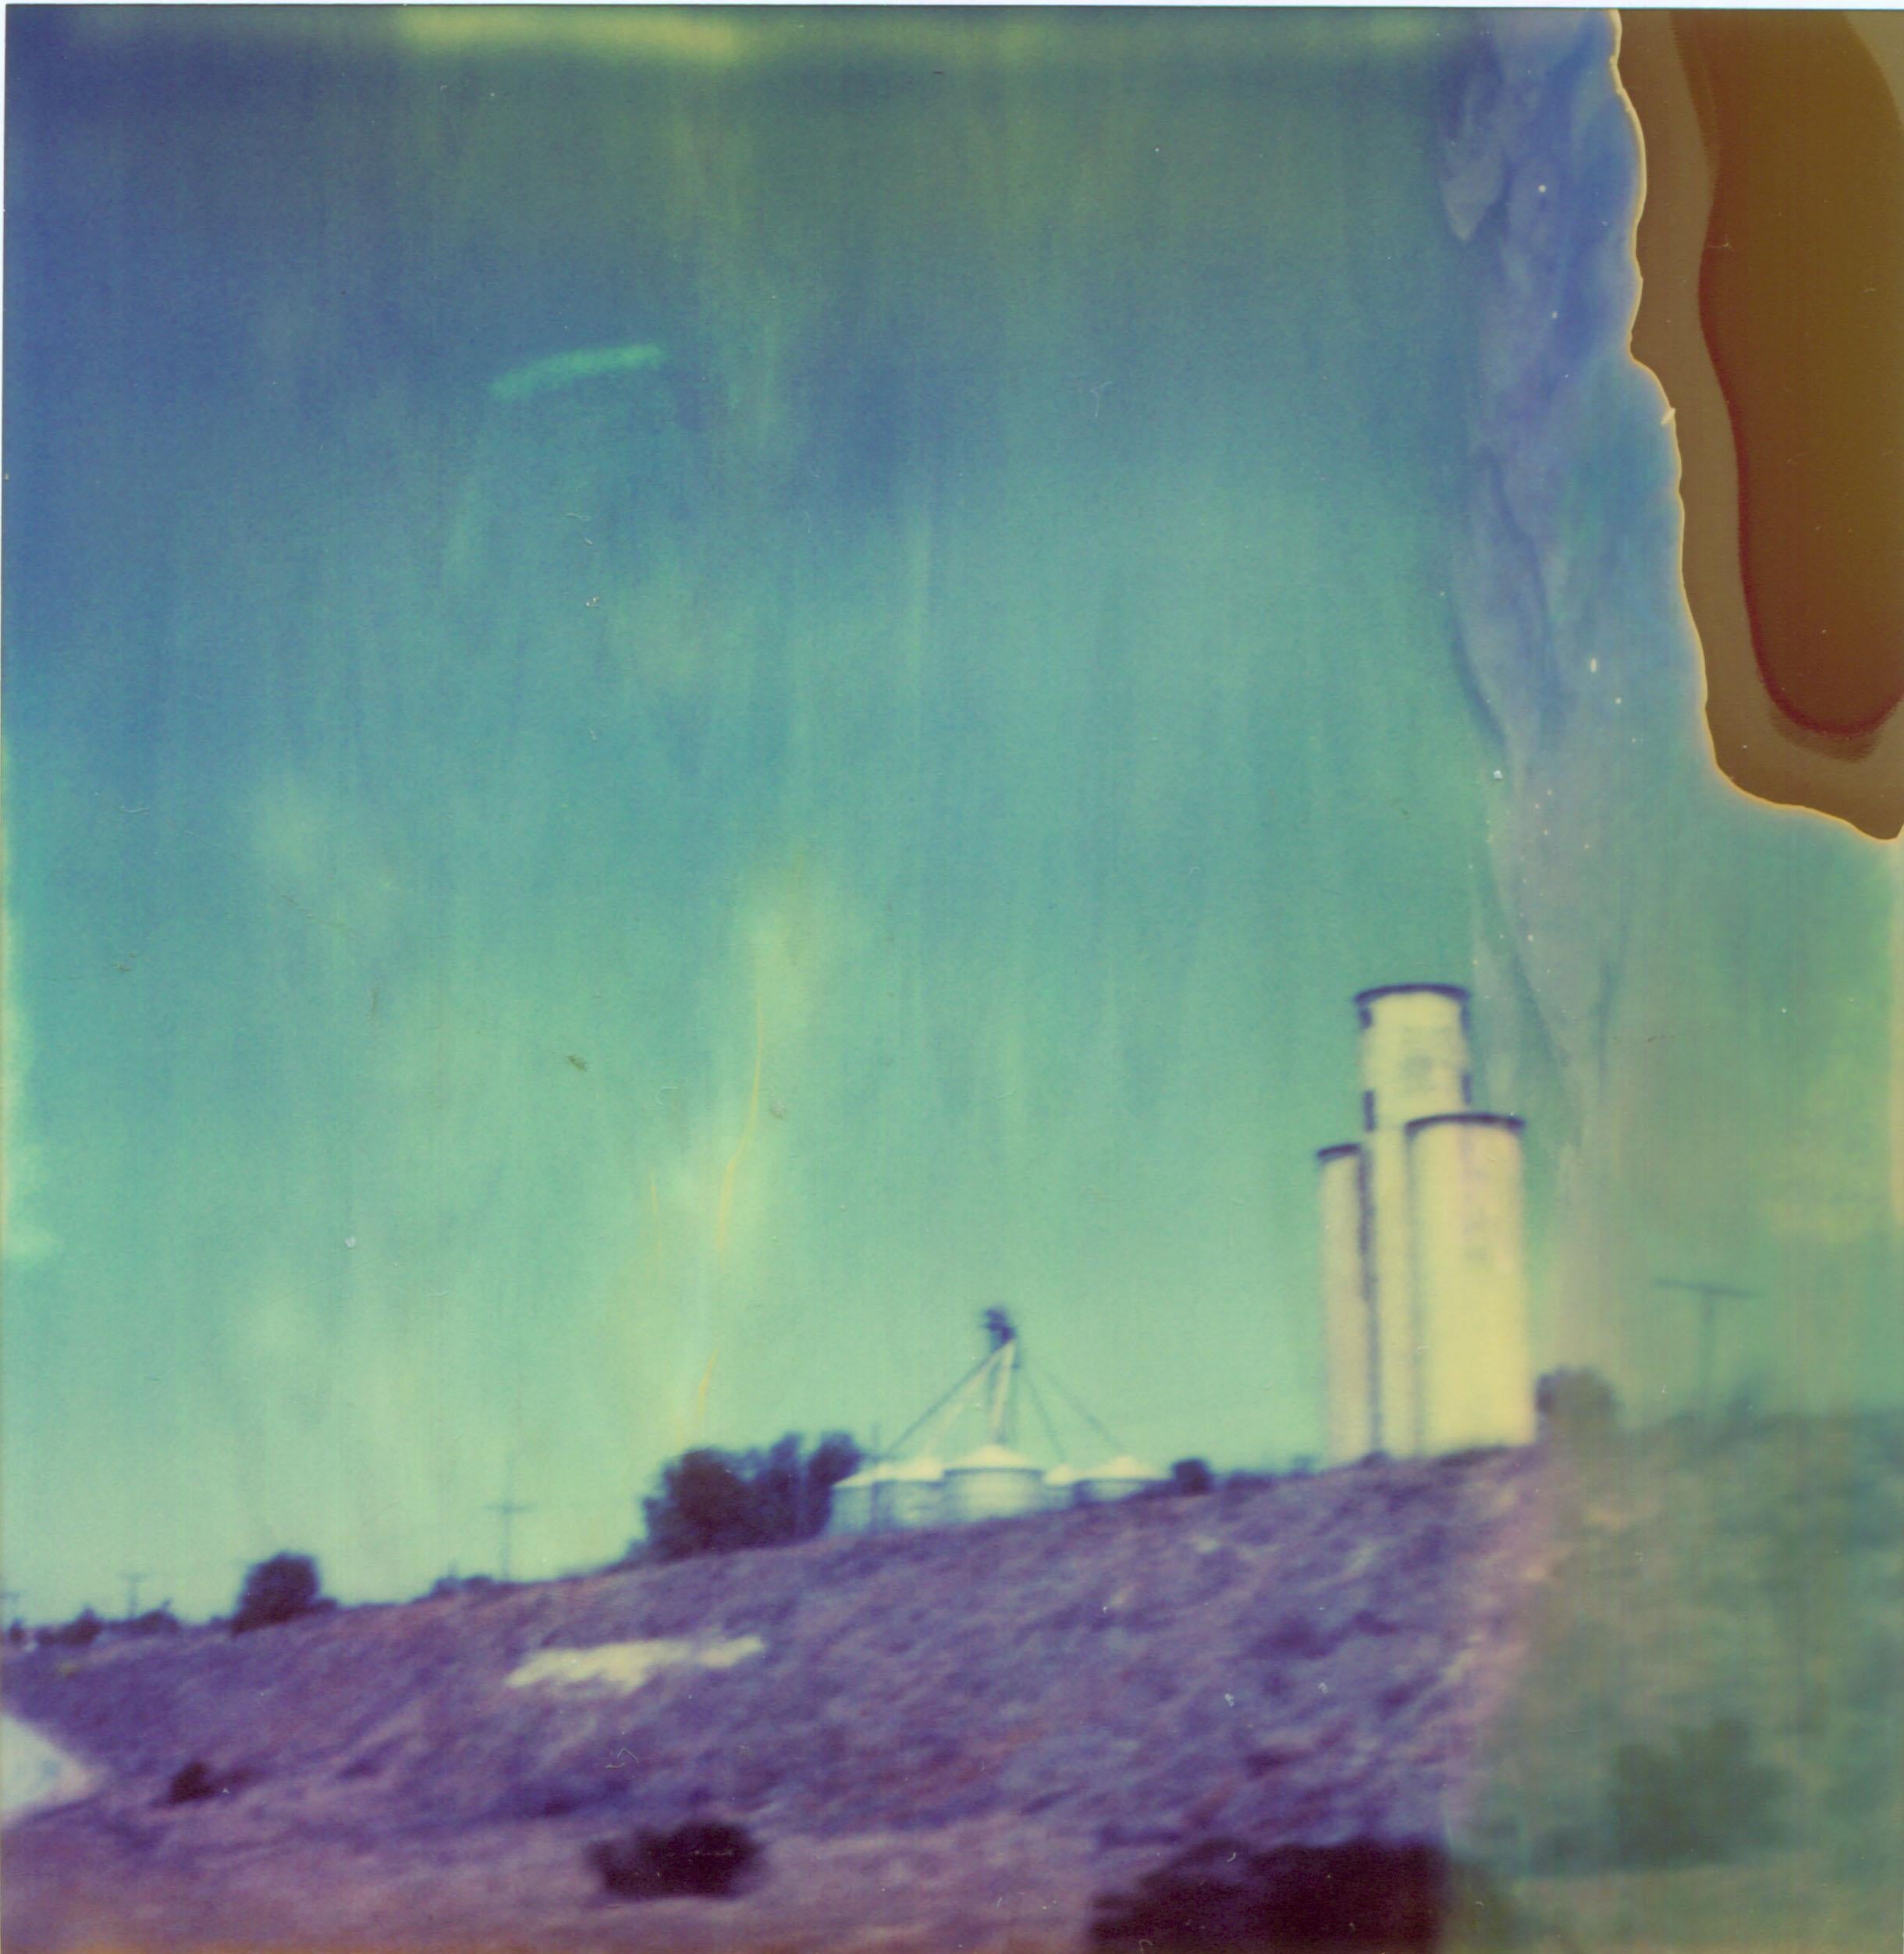 Stefanie Schneider Landscape Photograph – This is where we meet (Last Picture Show) - Contemporary, Polaroid, analog